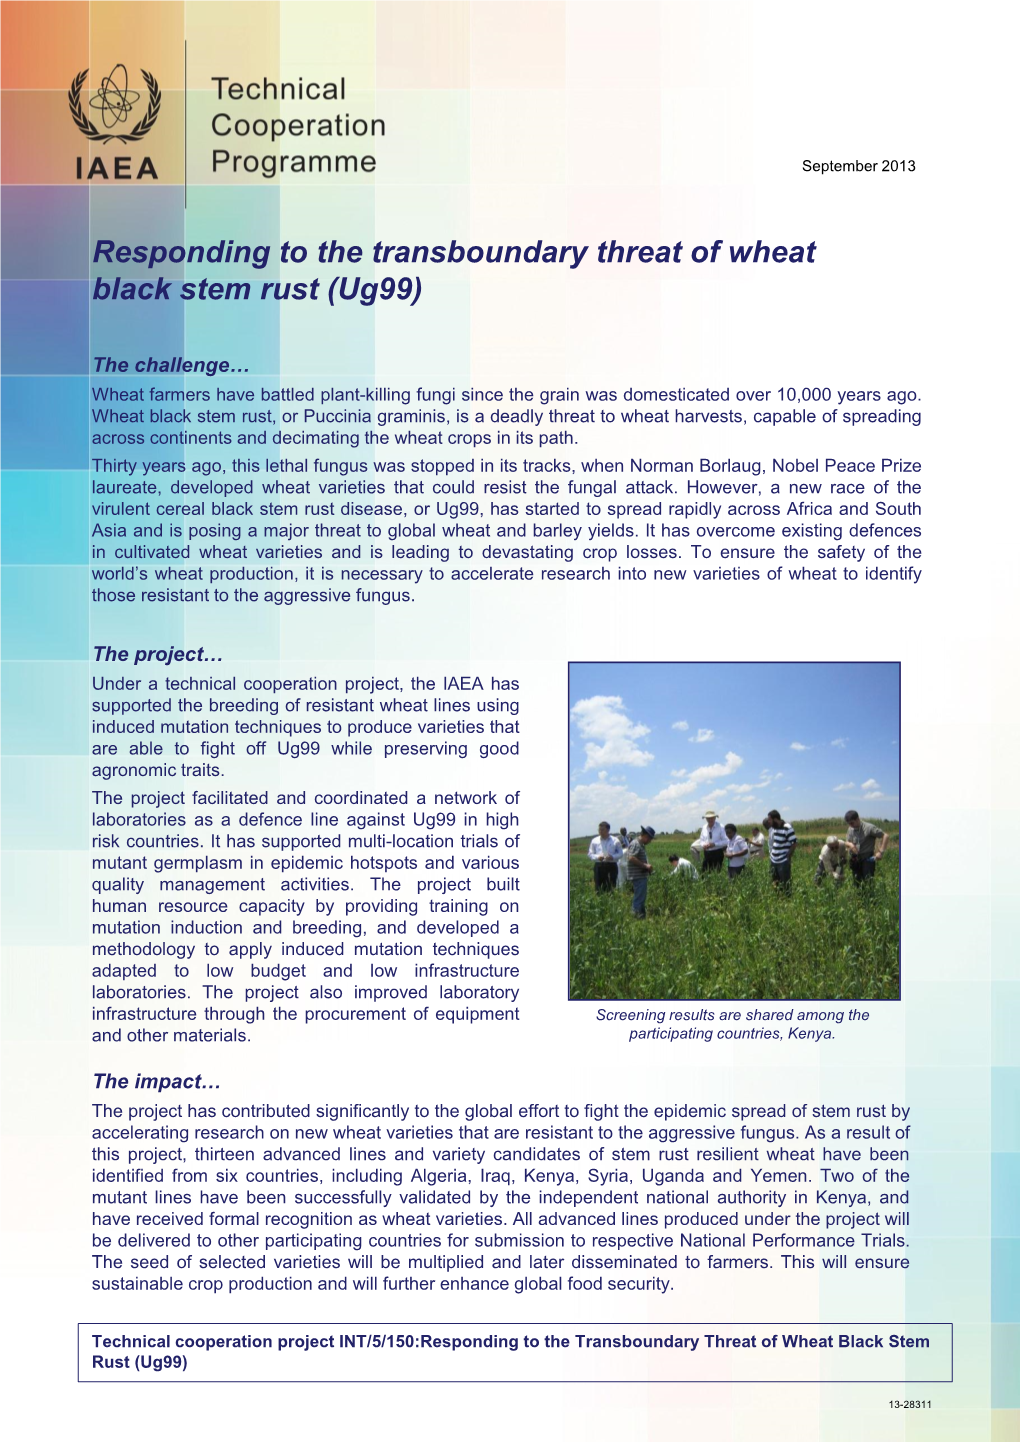 Responding to the Transboundary Threat of Wheat Black Stem Rust (Ug99)